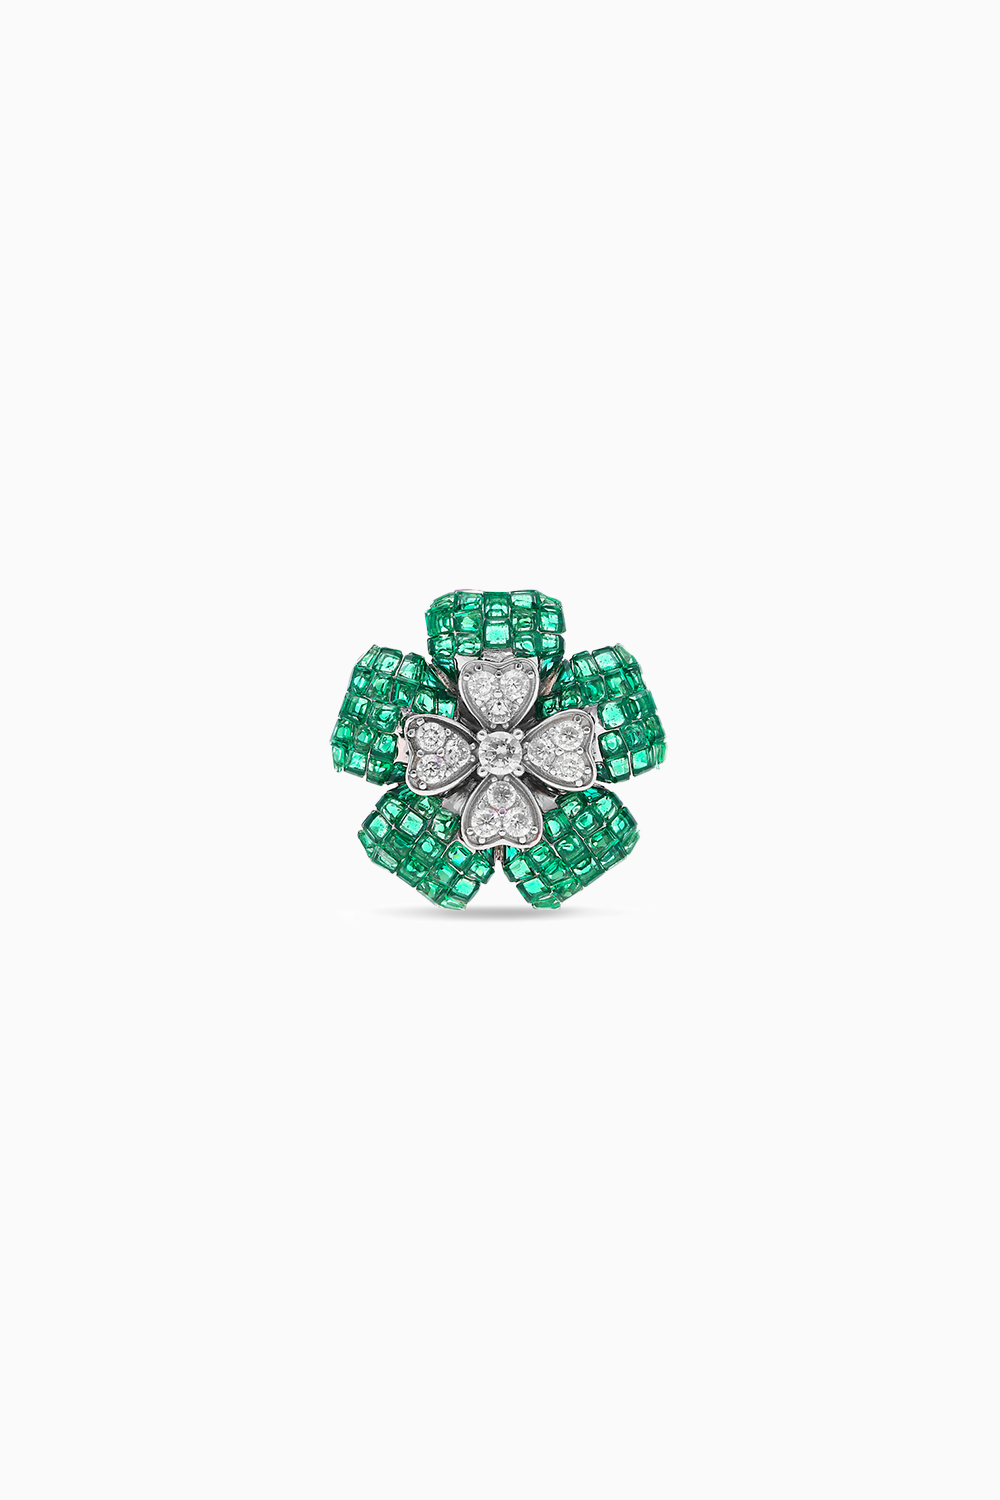 Blooming Euphoria Emerald Green Ring